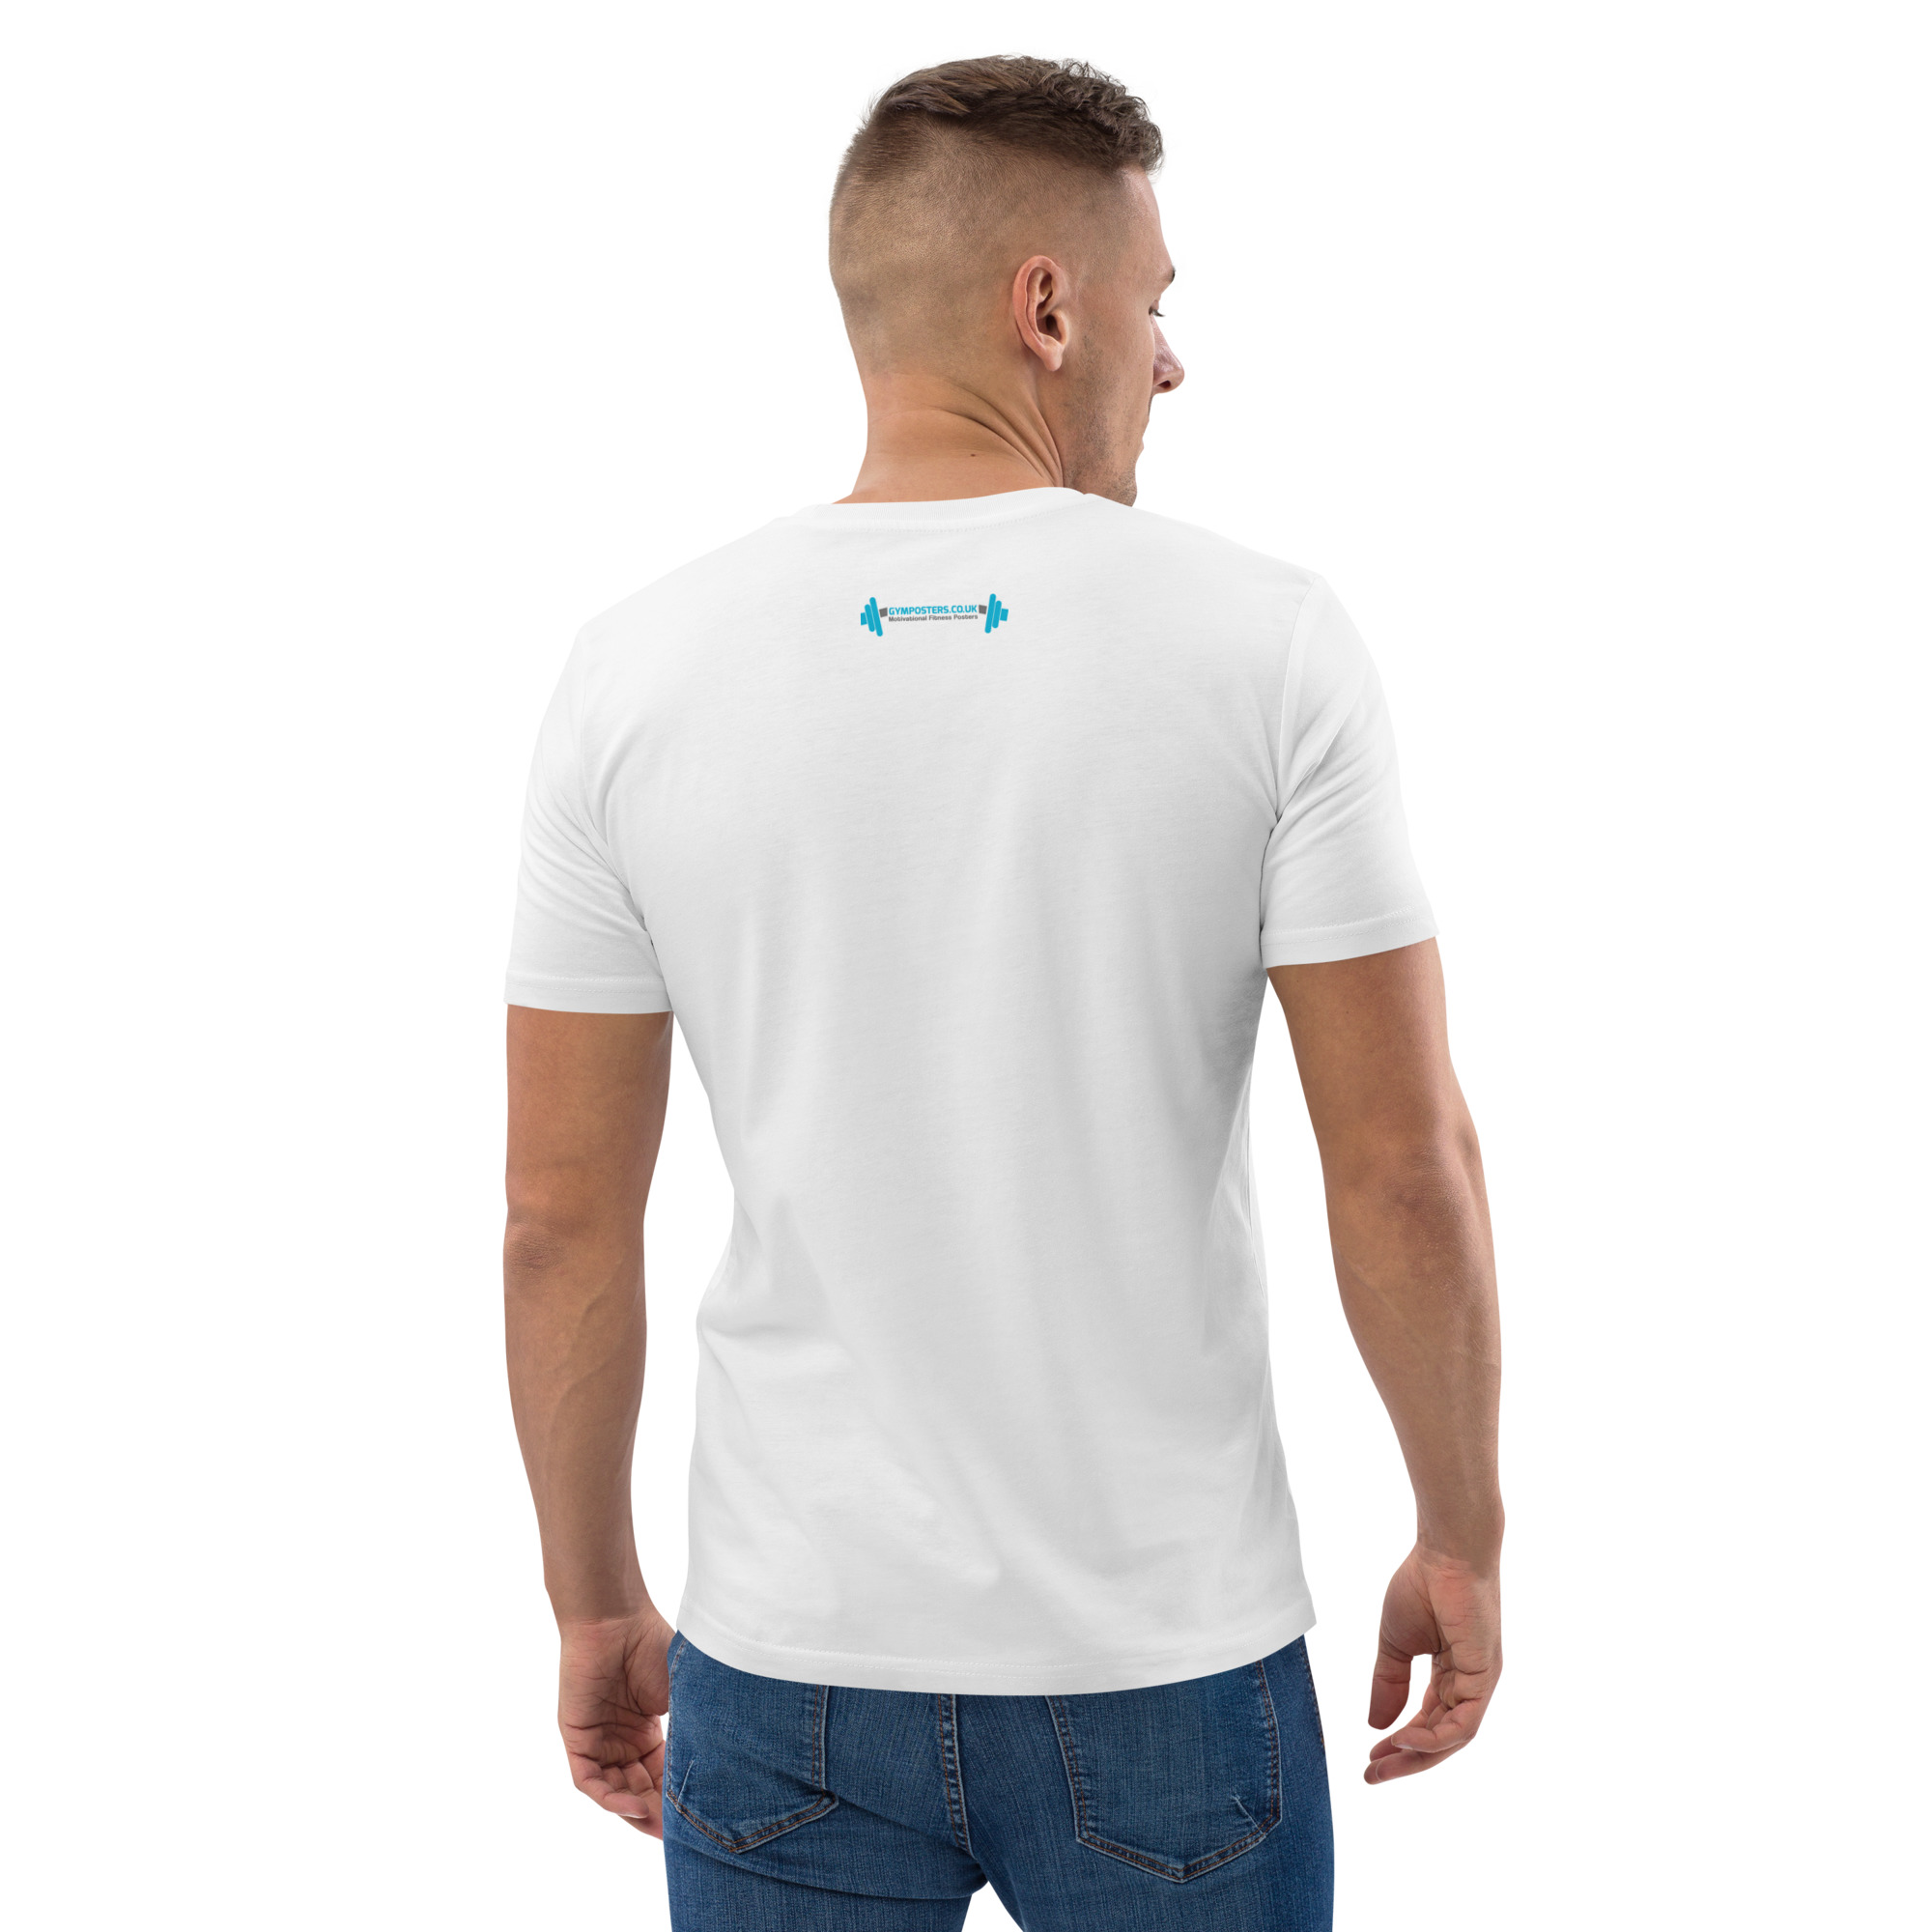 unisex-organic-cotton-t-shirt-white-back-657846d5181a5.jpg